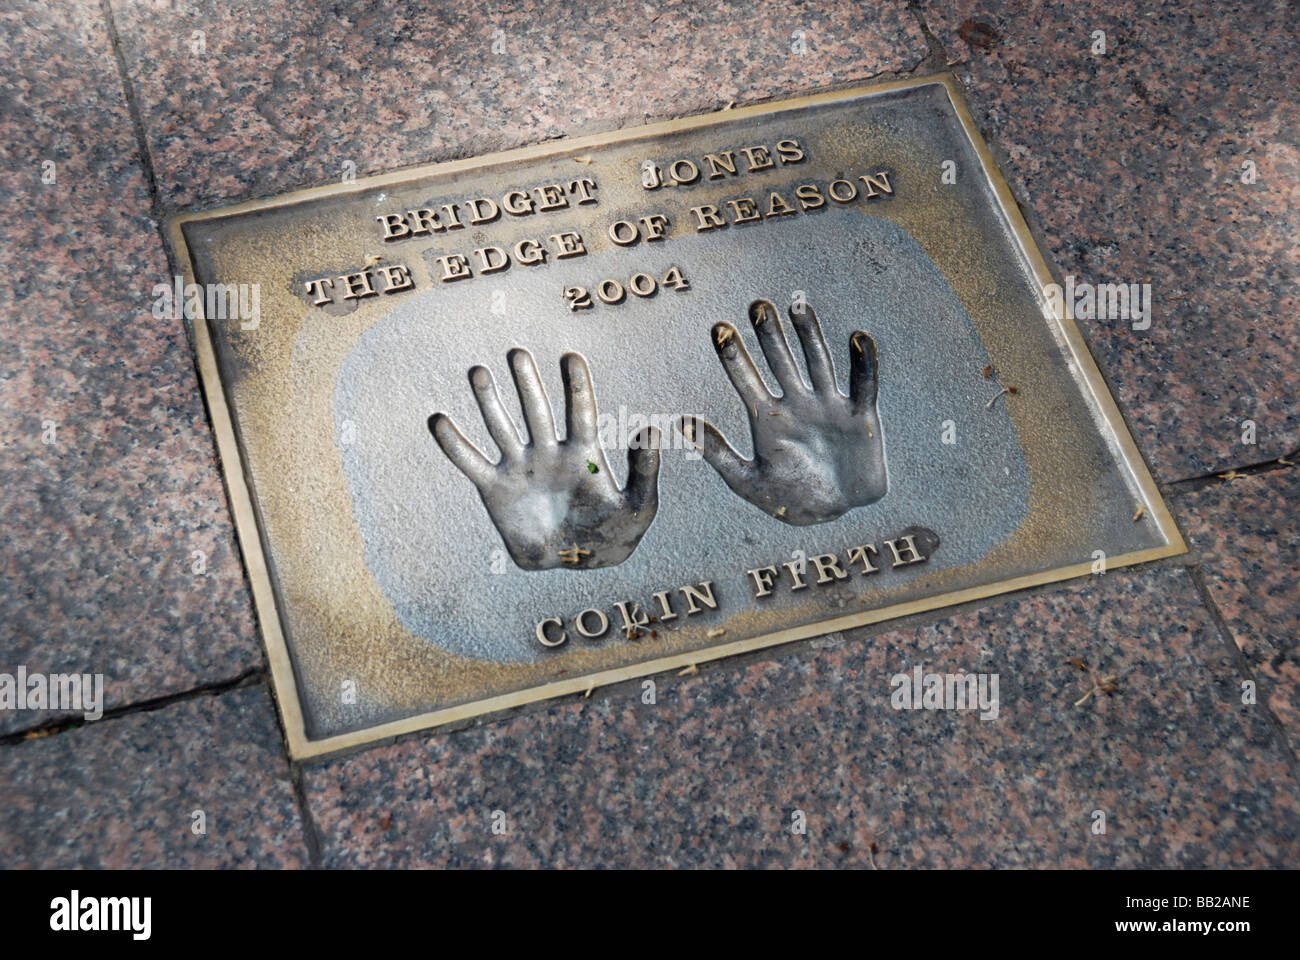 Colin Firth huella en pavimento conmemorando la película Bridget Jones al borde de la razón Leicester Square London Foto de stock